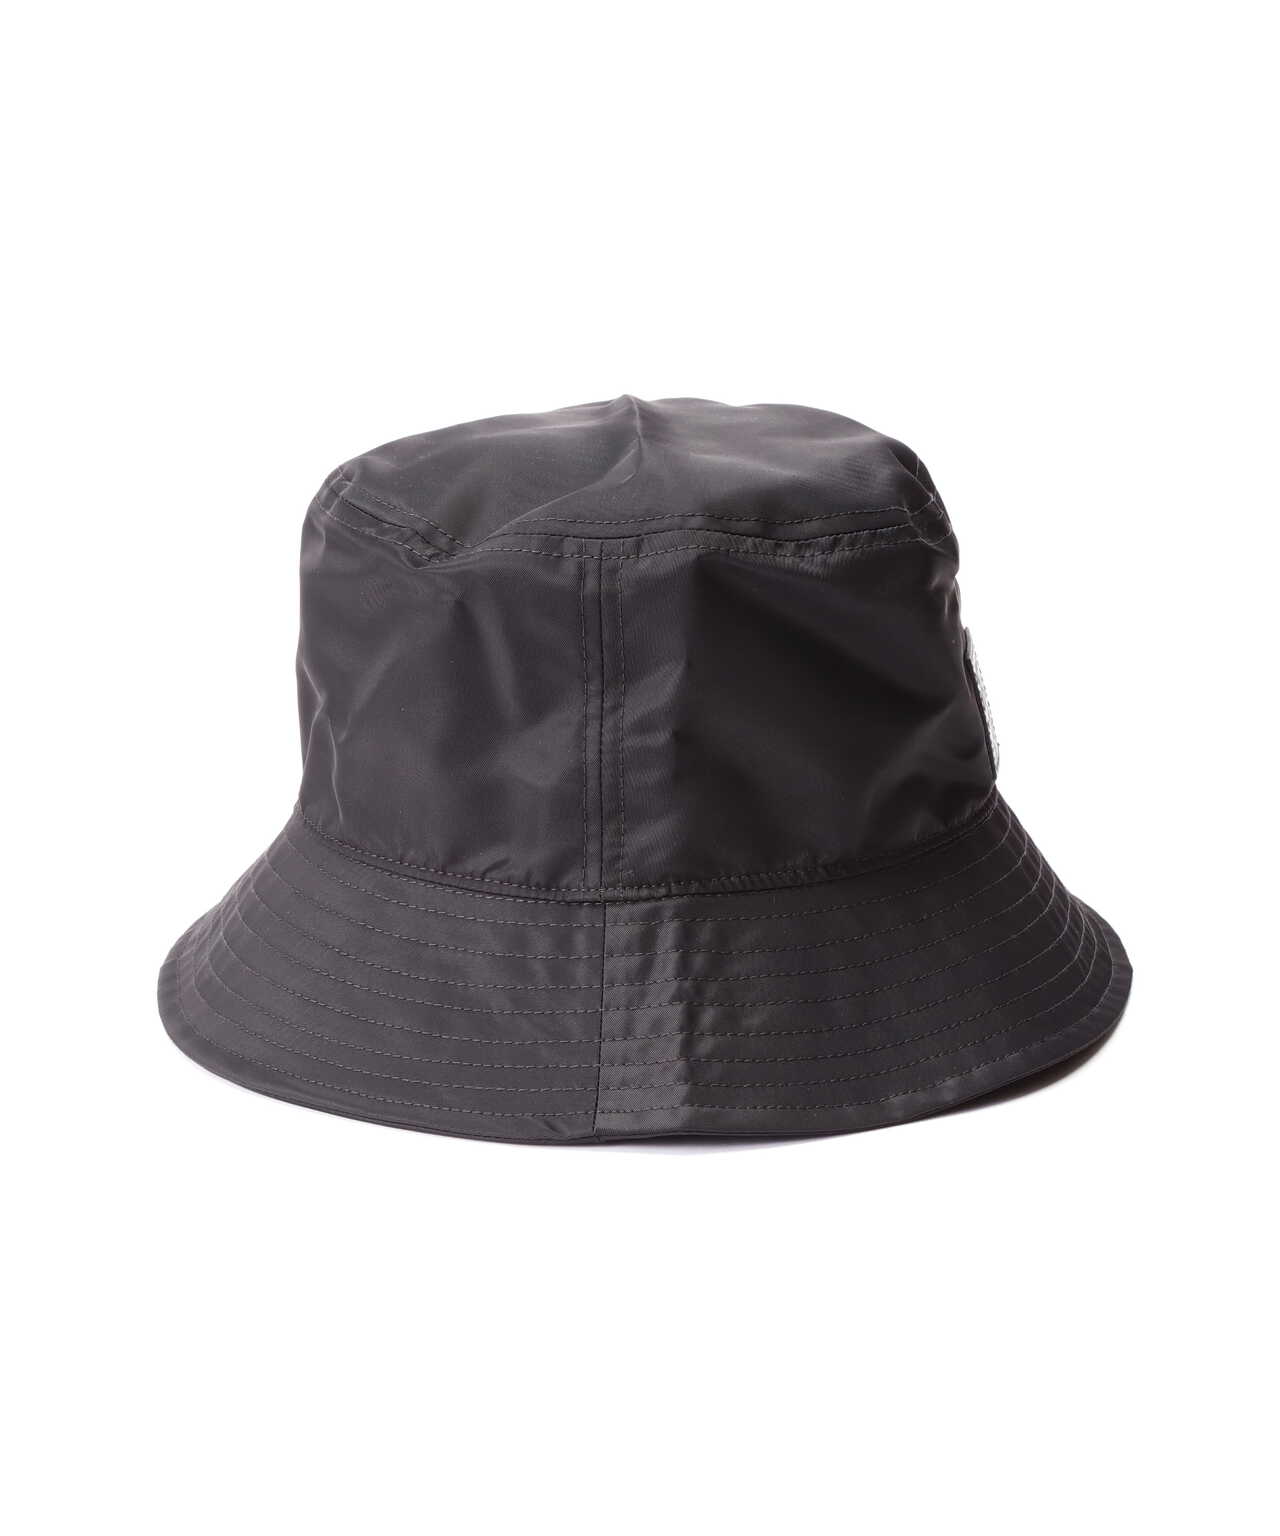 RAFSIMONS/ラフシモンズ/Bucket Hat With Small Leater/バケットハット 